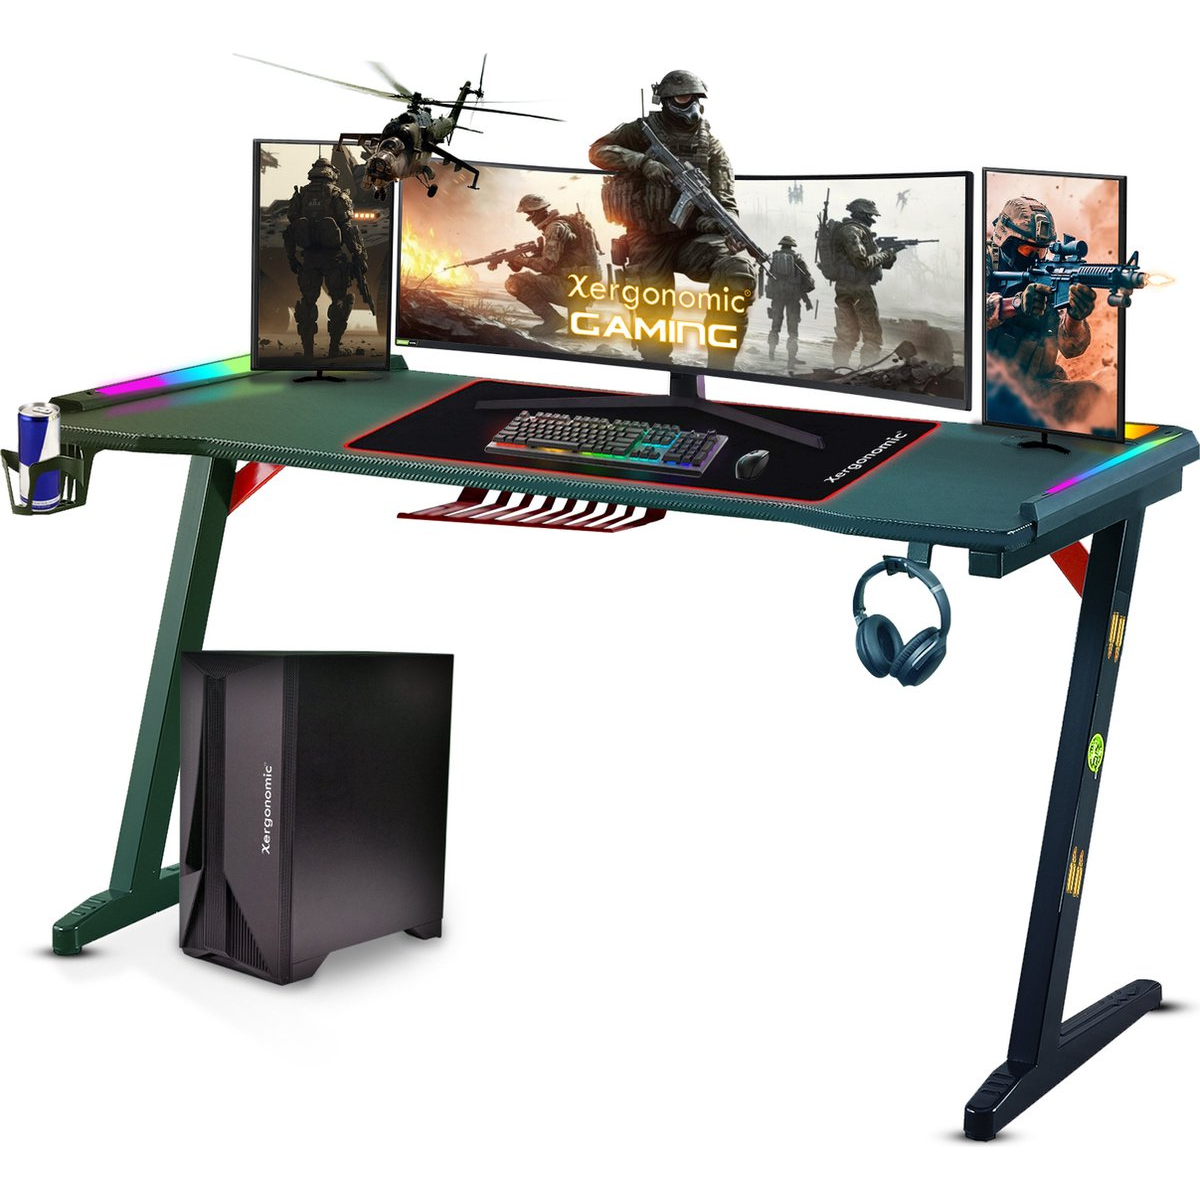 Xergonomic Hard2Kill Gaming Desk - Game Desk - Desk - Game Desk 140cm